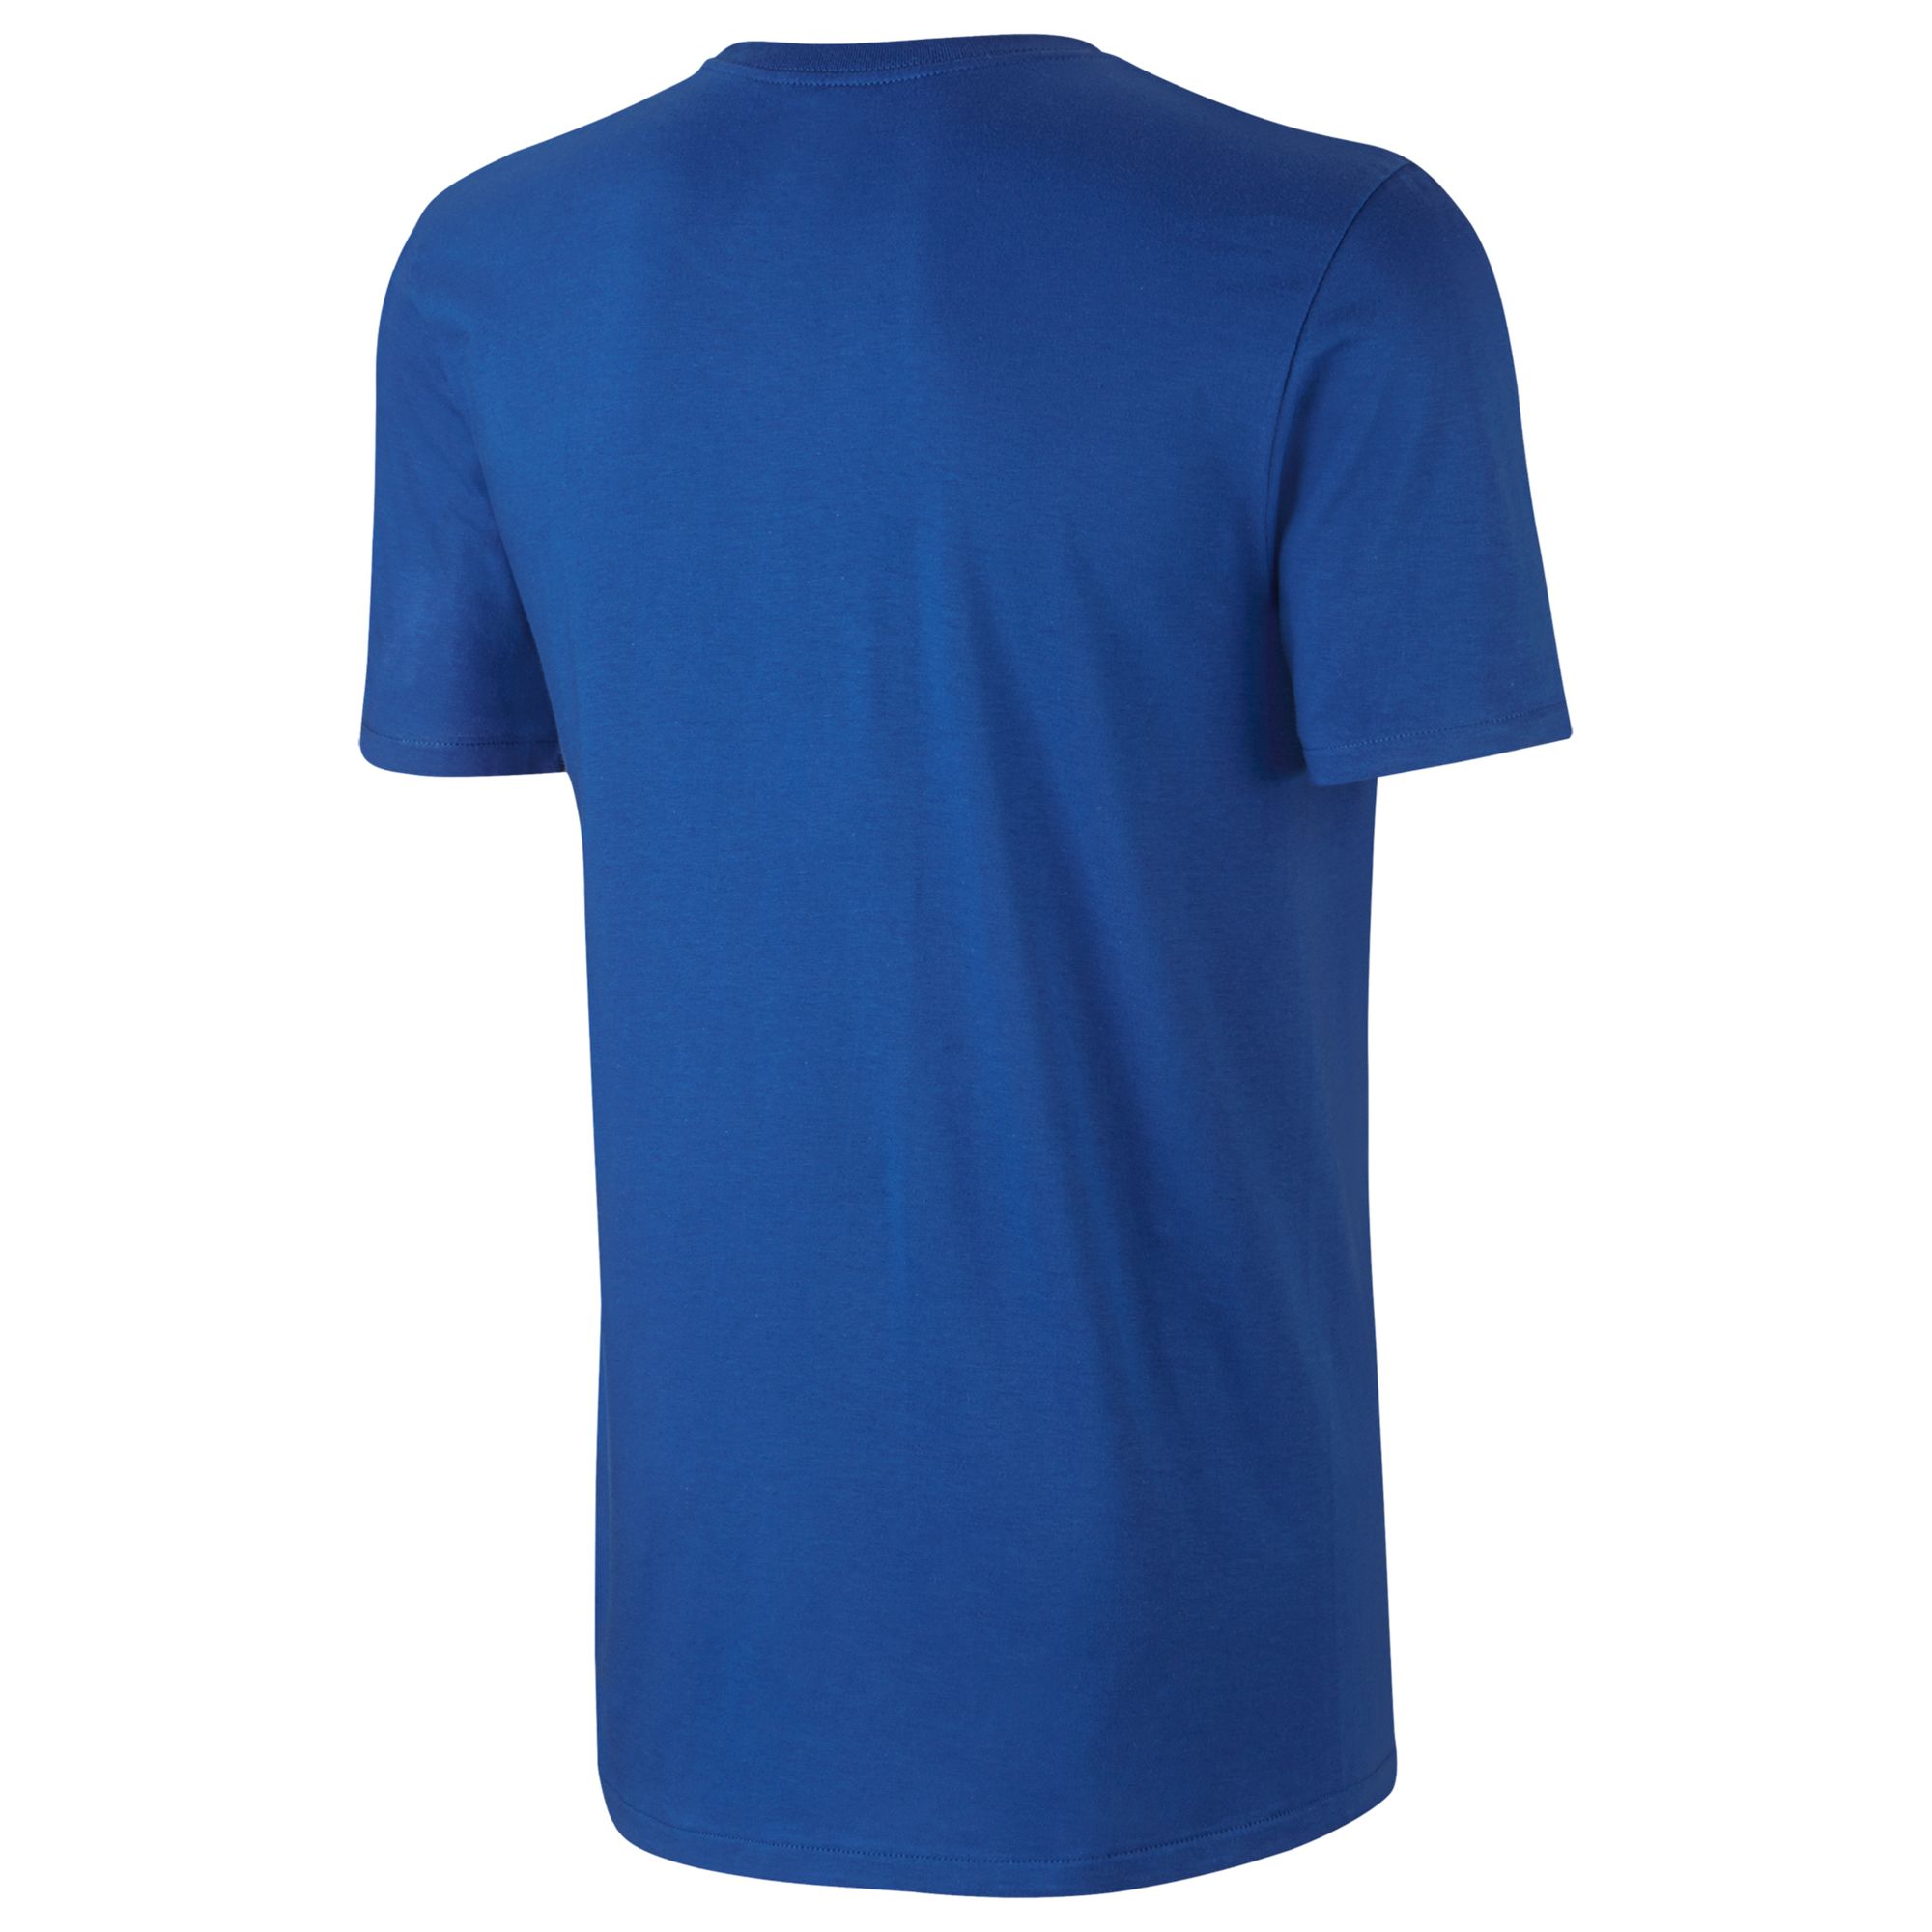 Nike Sportswear Swoosh Cotton T-Shirt, Blue/White